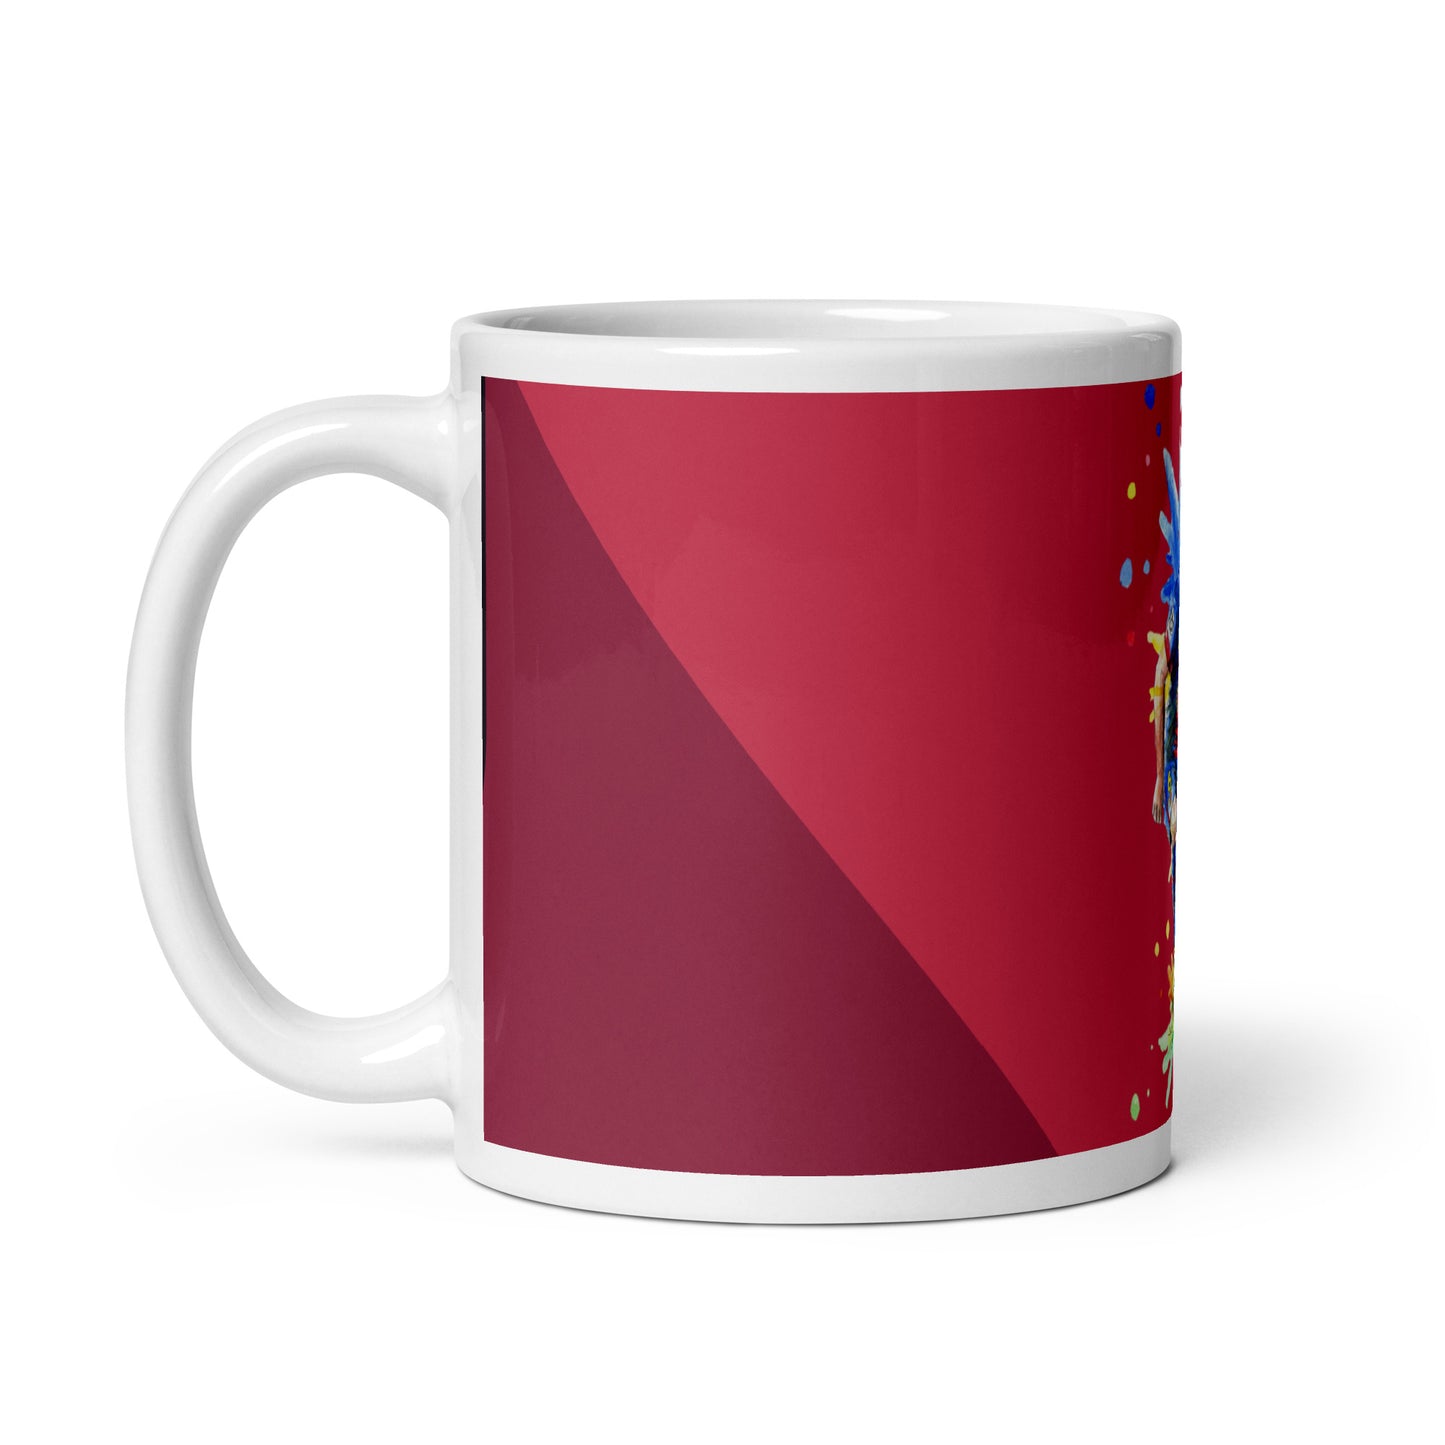 Xavi Barcelona Coffee mug